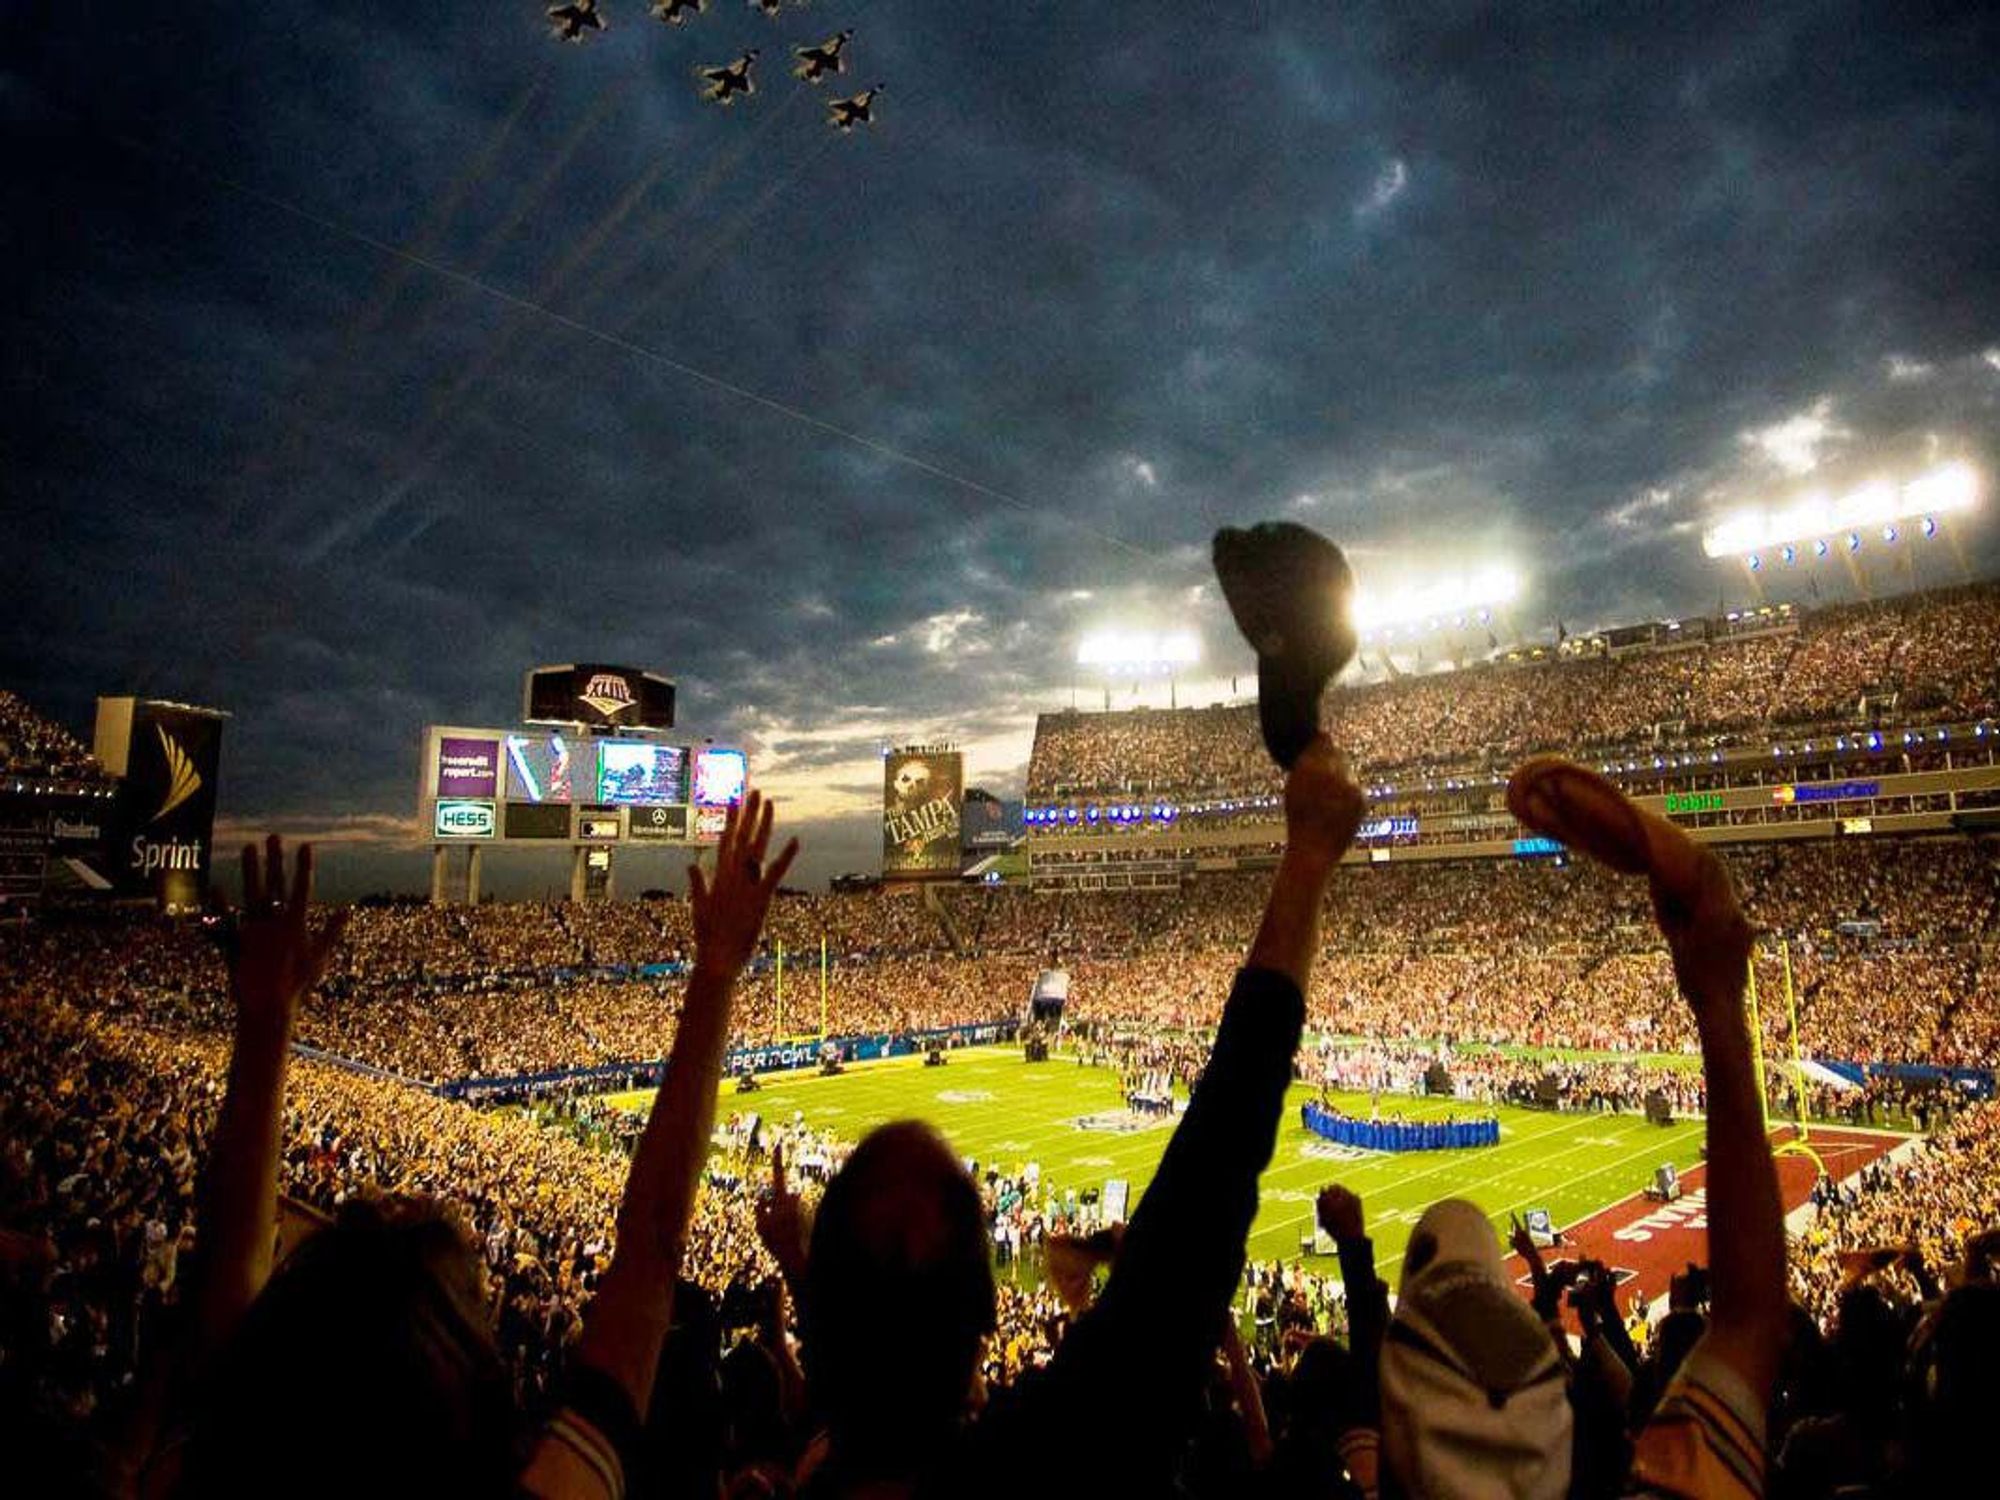 Super Bowl, football game, crowd, fans, stadium